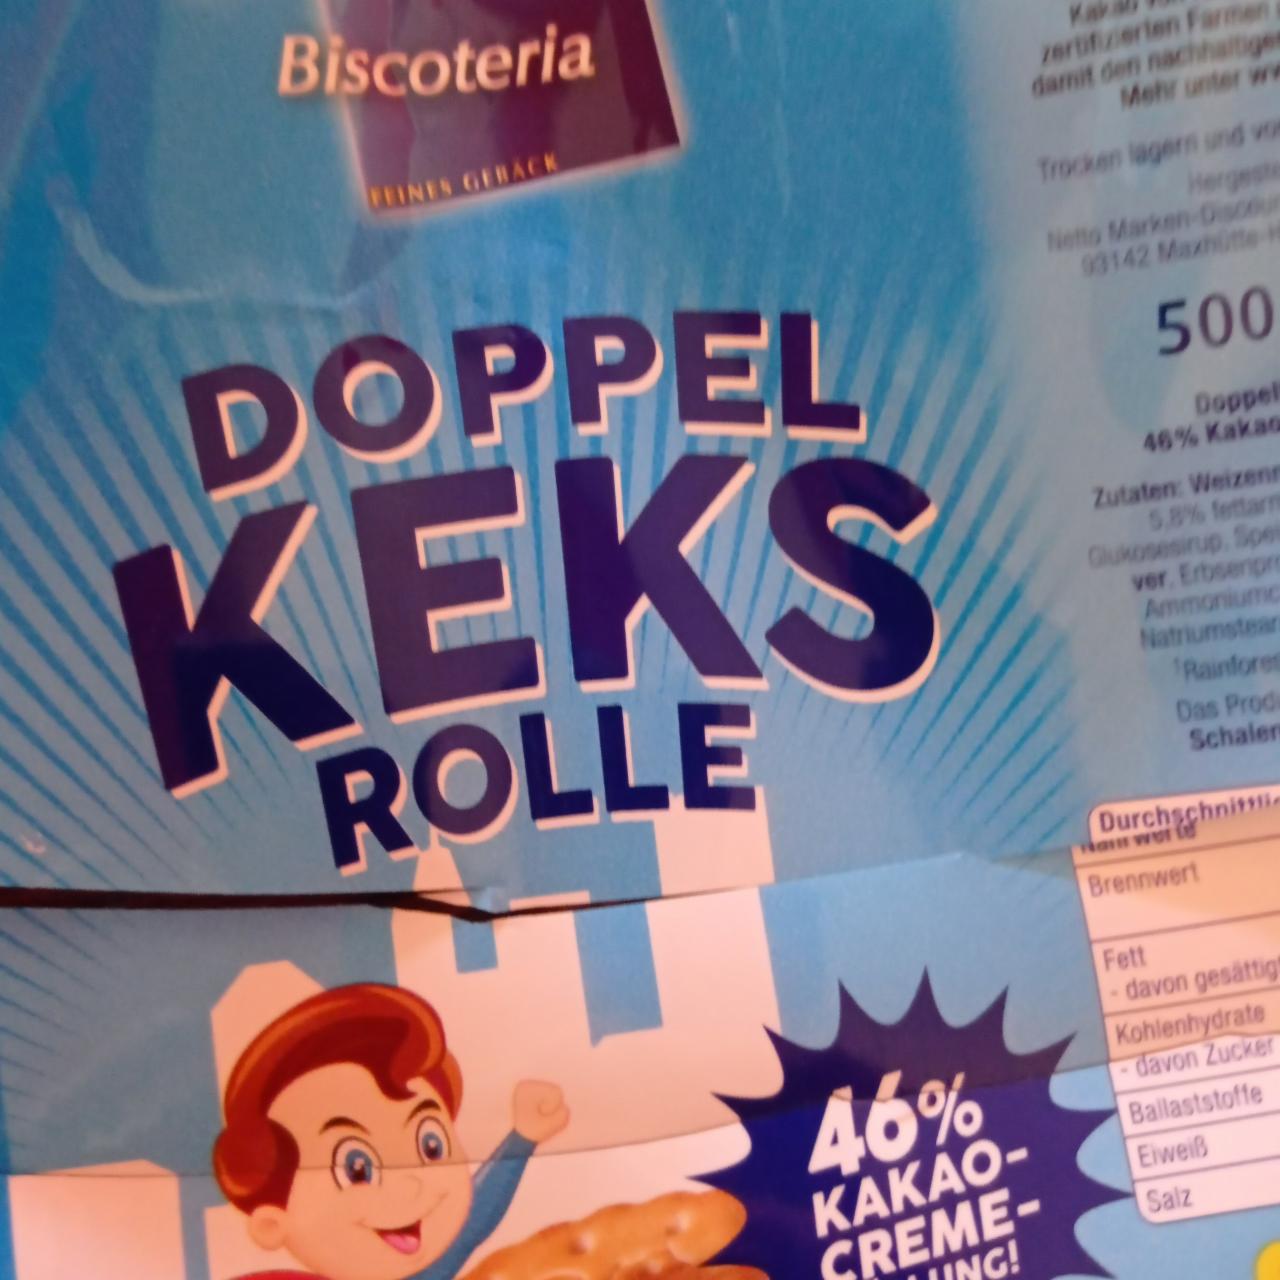 Fotografie - Doppel keks rolle Biscoteria